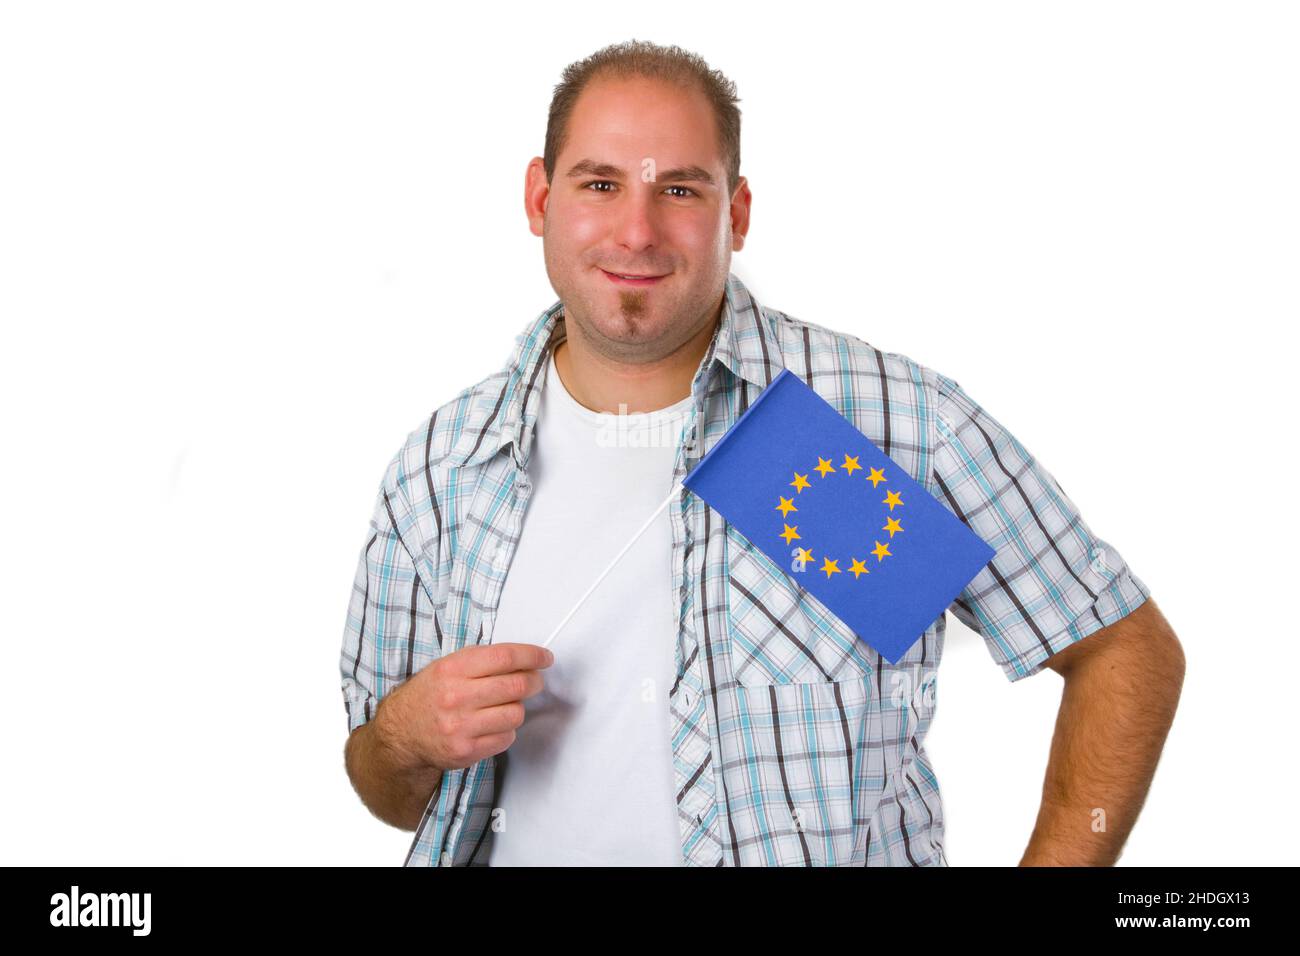 young man, europe, europeans, european community, european union flag, guy, man, men, young, europes, european, european communities, european union Stock Photo